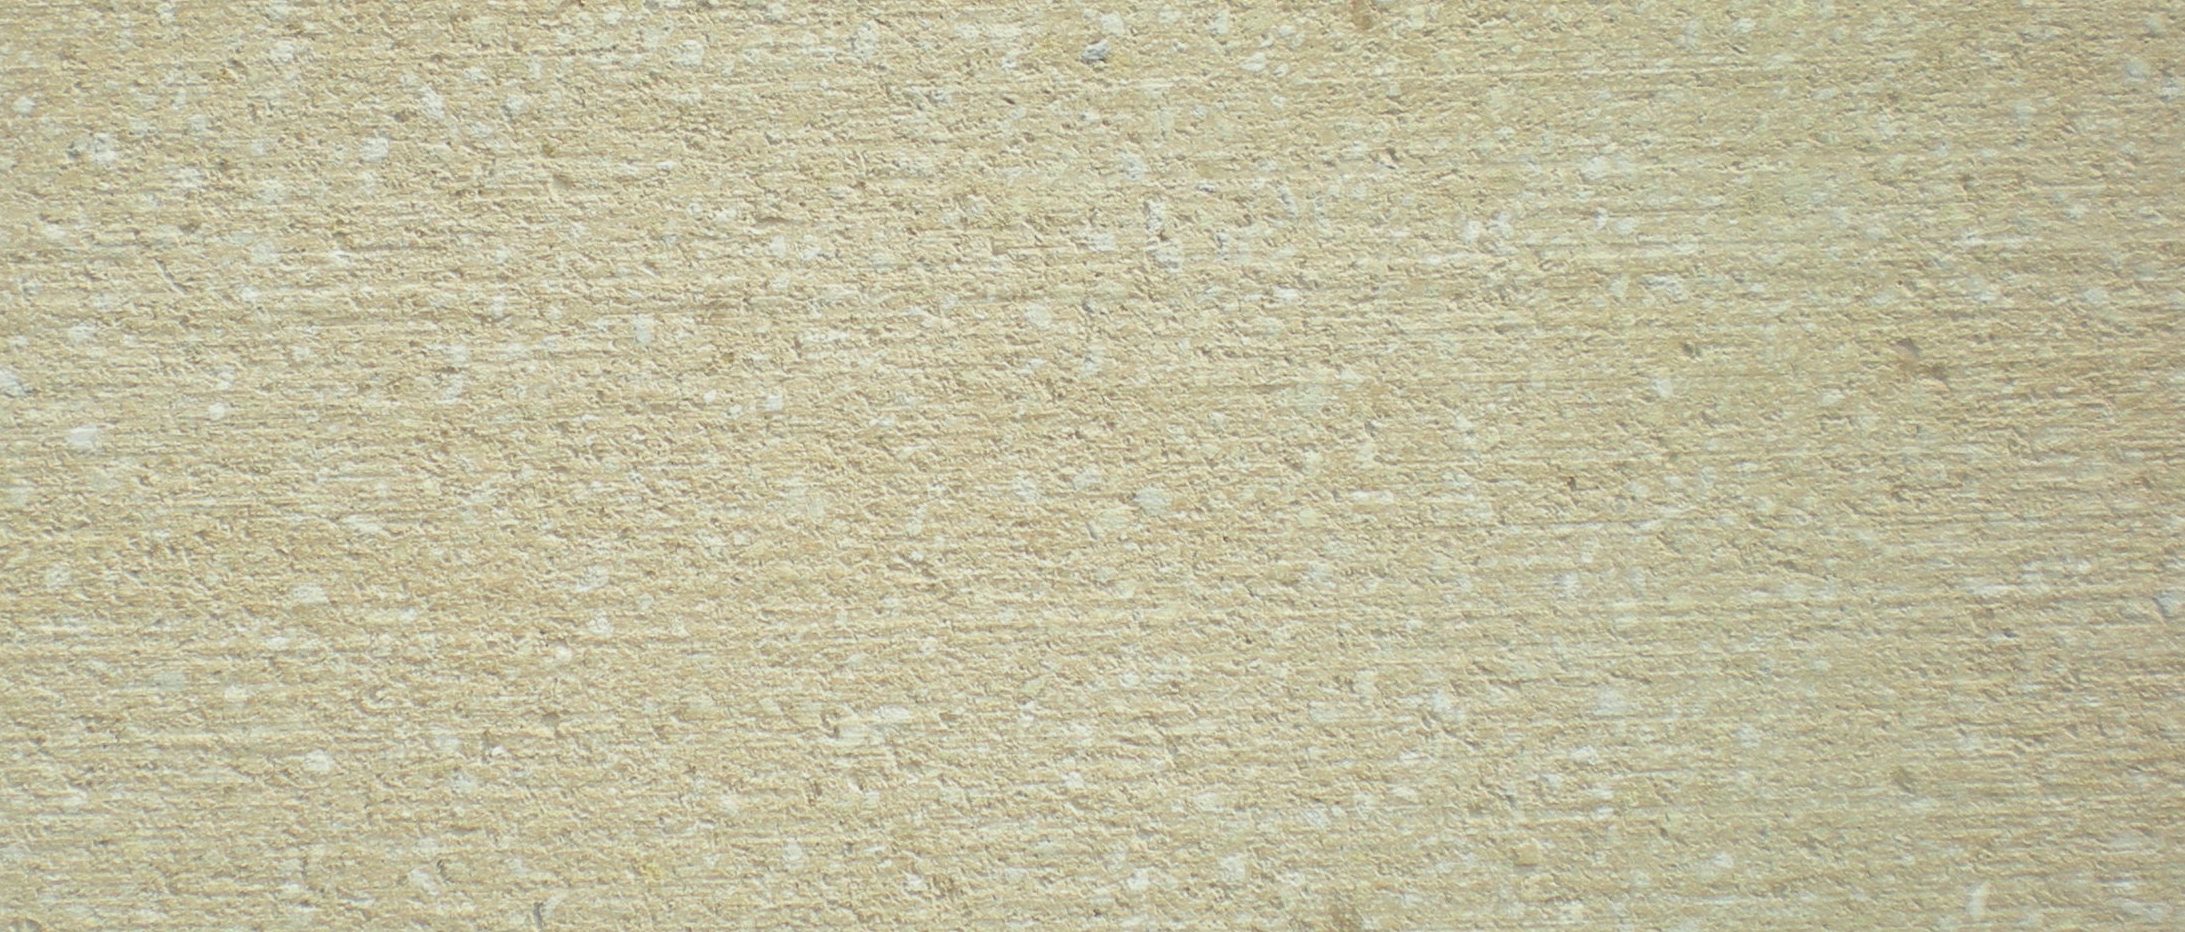 Bath stone texture